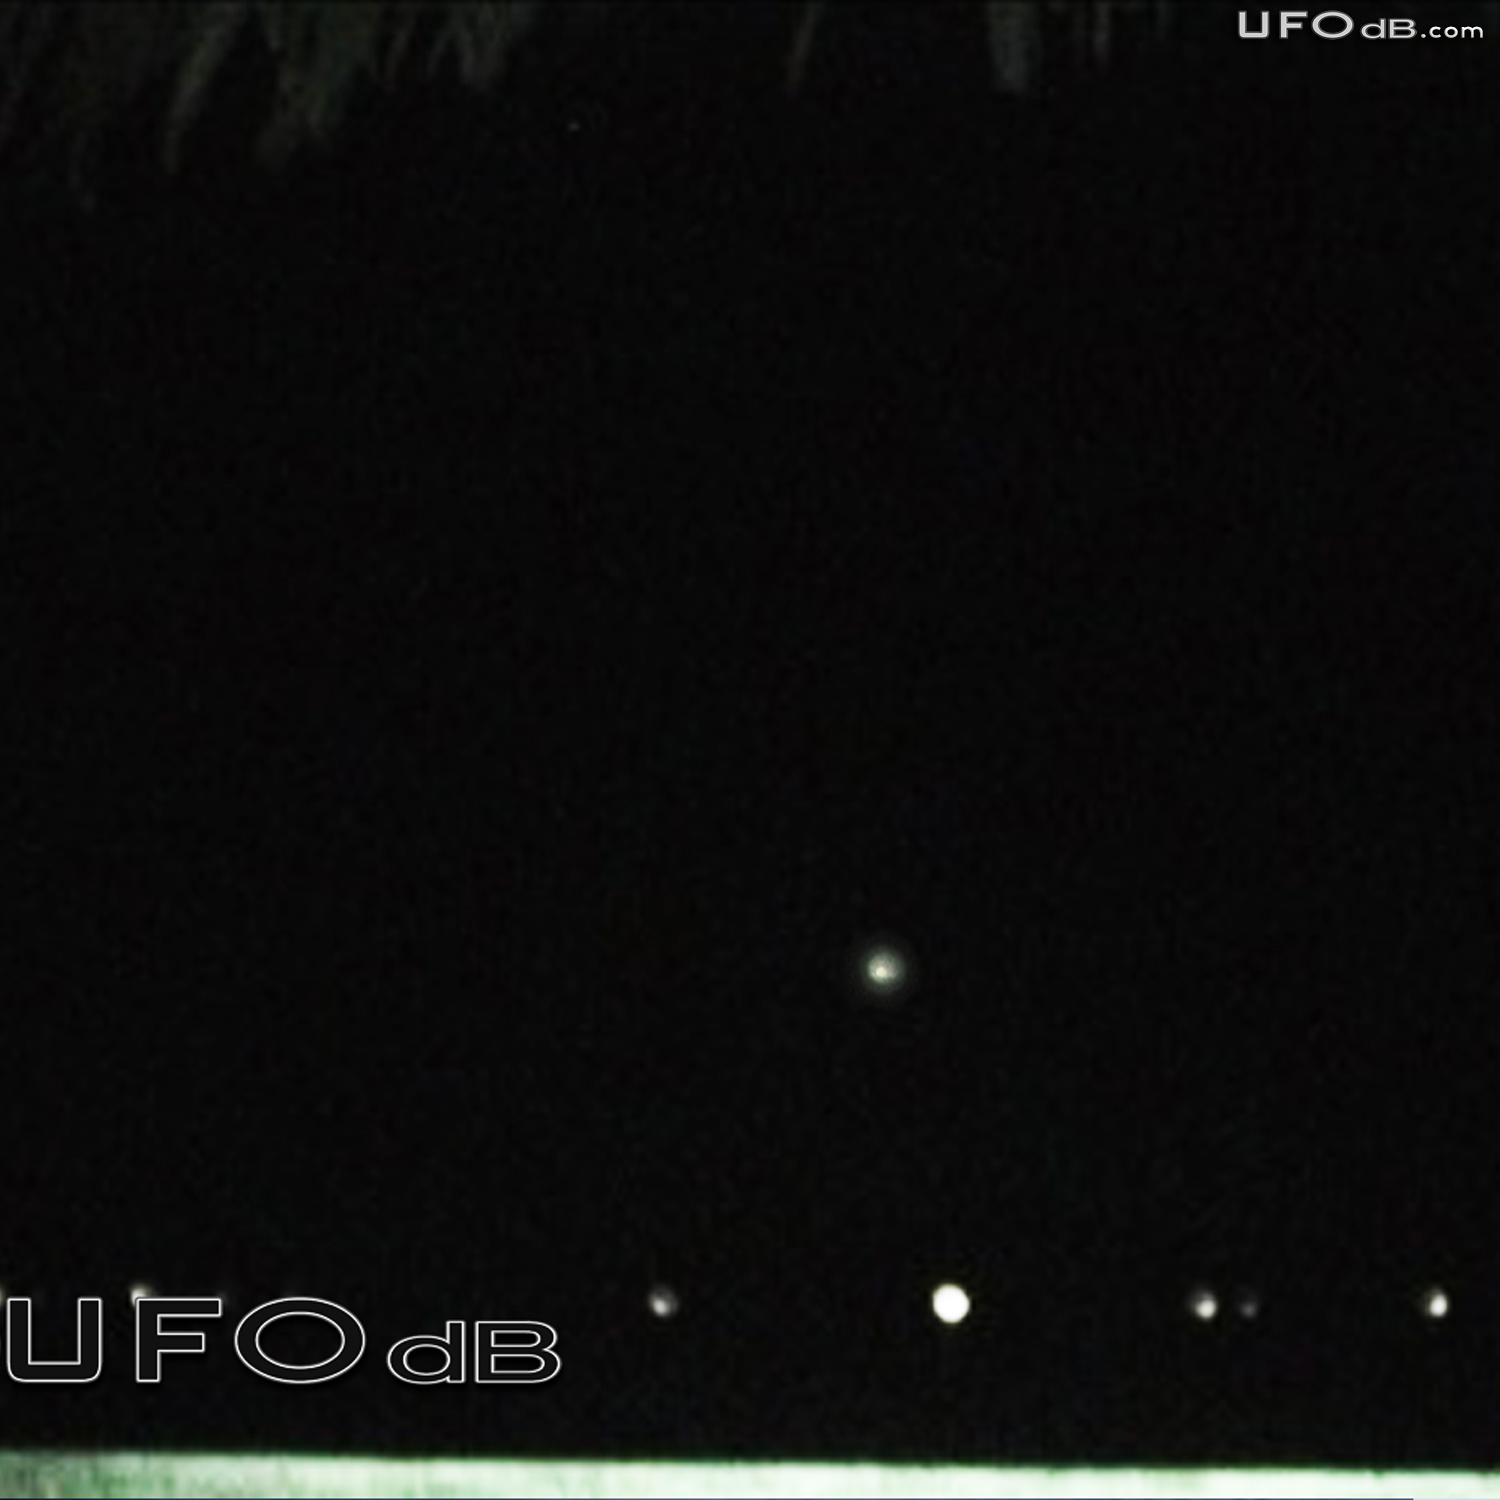 In the Dark Night, picture captures UFO over the Ocean | Ecuador 2009 UFO Picture #248-2